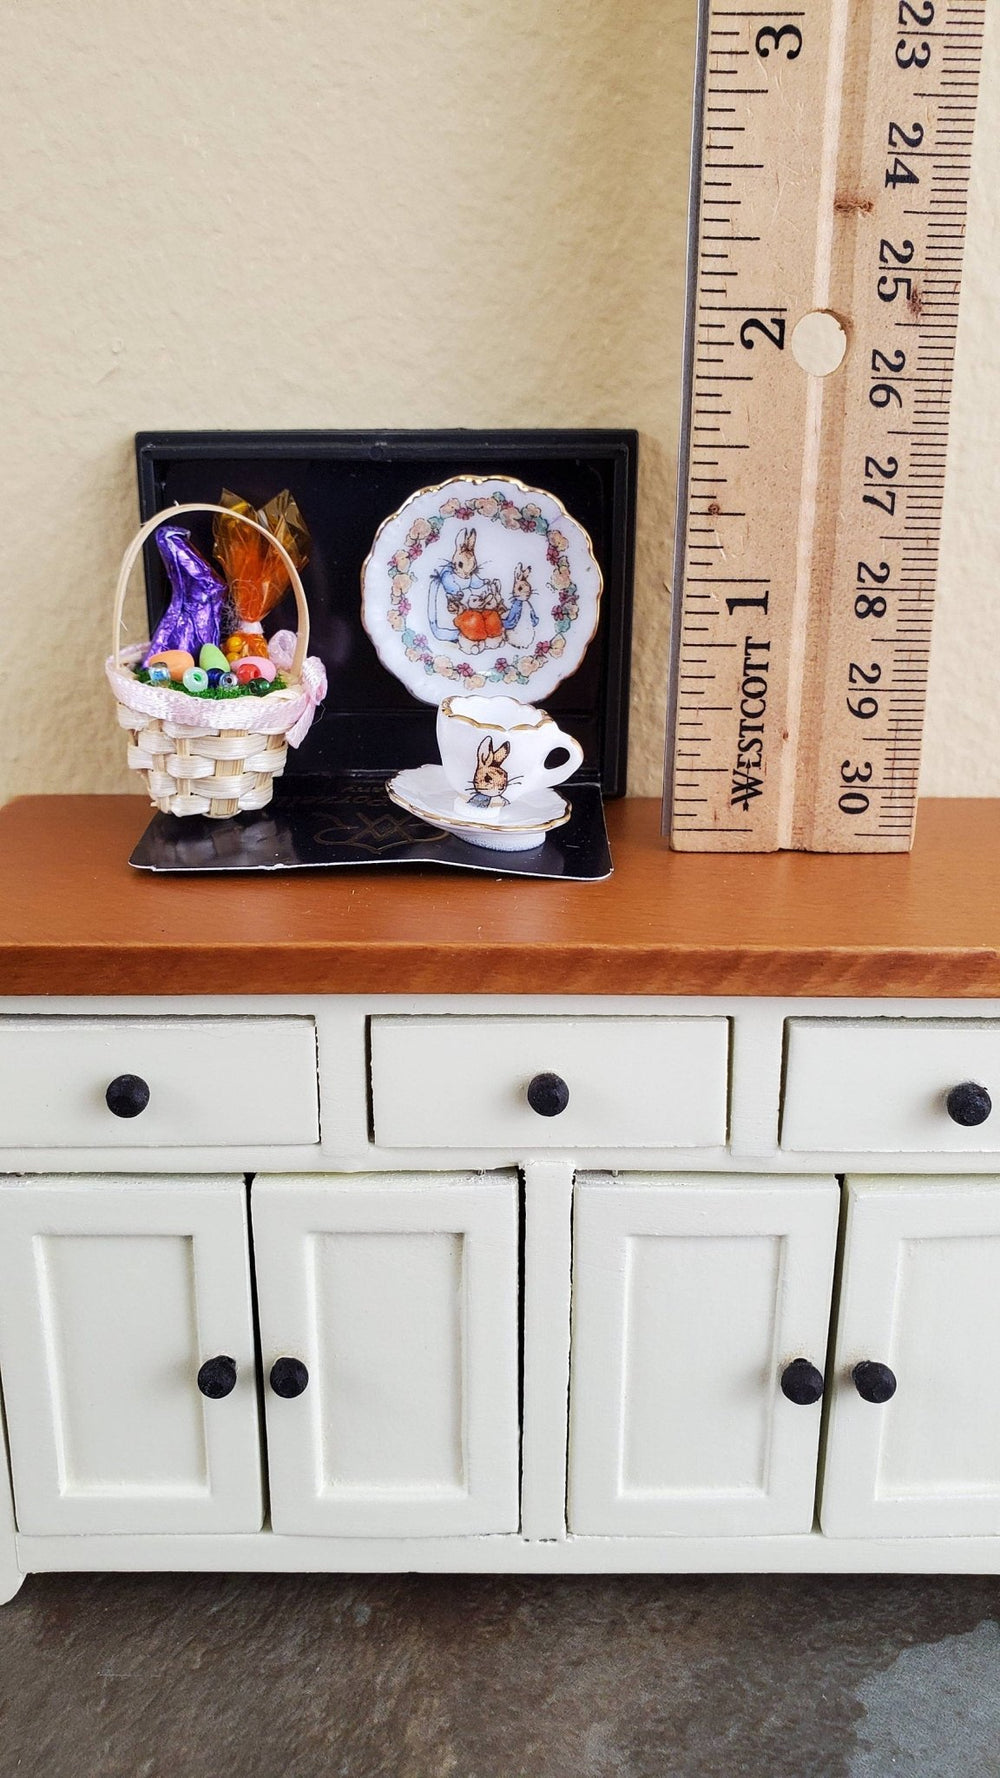 Dollhouse Miniature Peter Rabbit Easter Bunny Set Dishes Reutter Porcelain 1:12 Scale - Miniature Crush